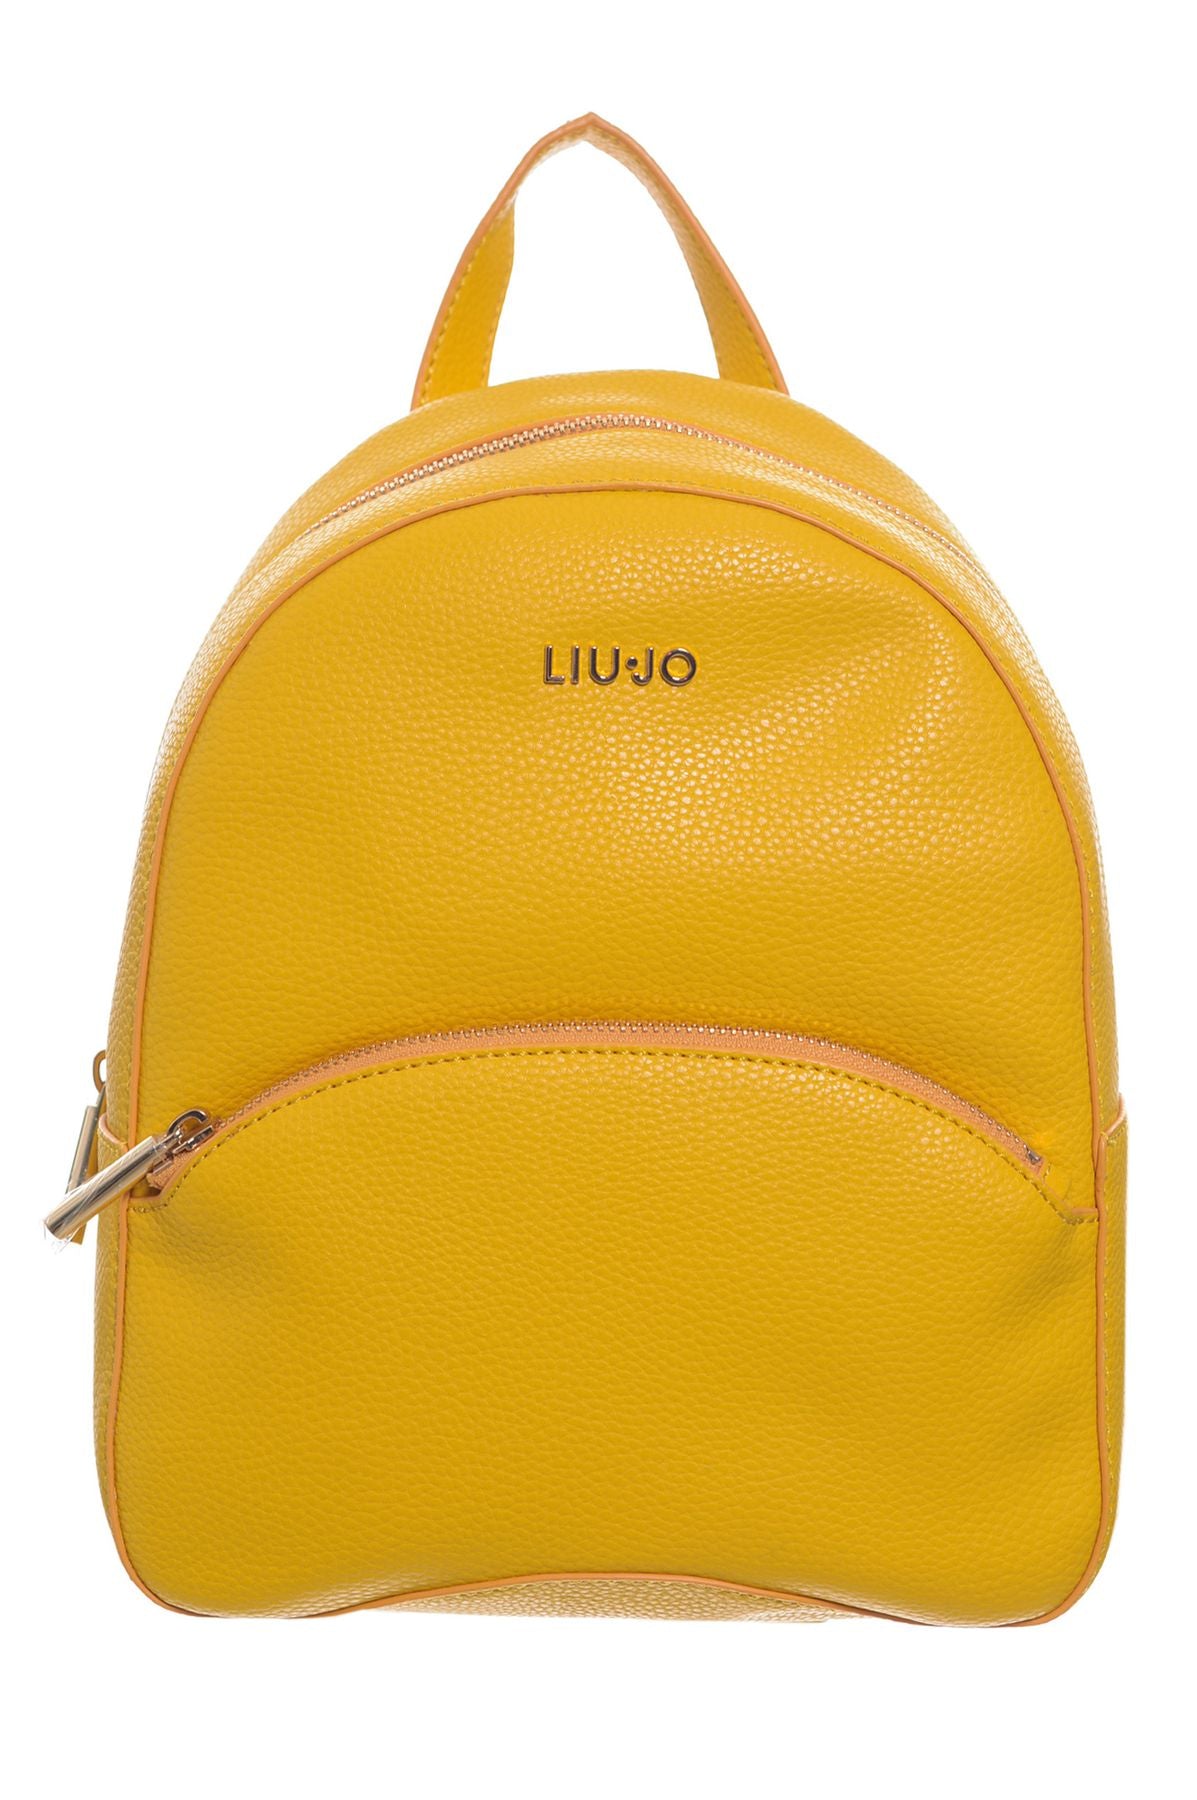 LIU.JO Spring/Summer backpacks in polyurethane